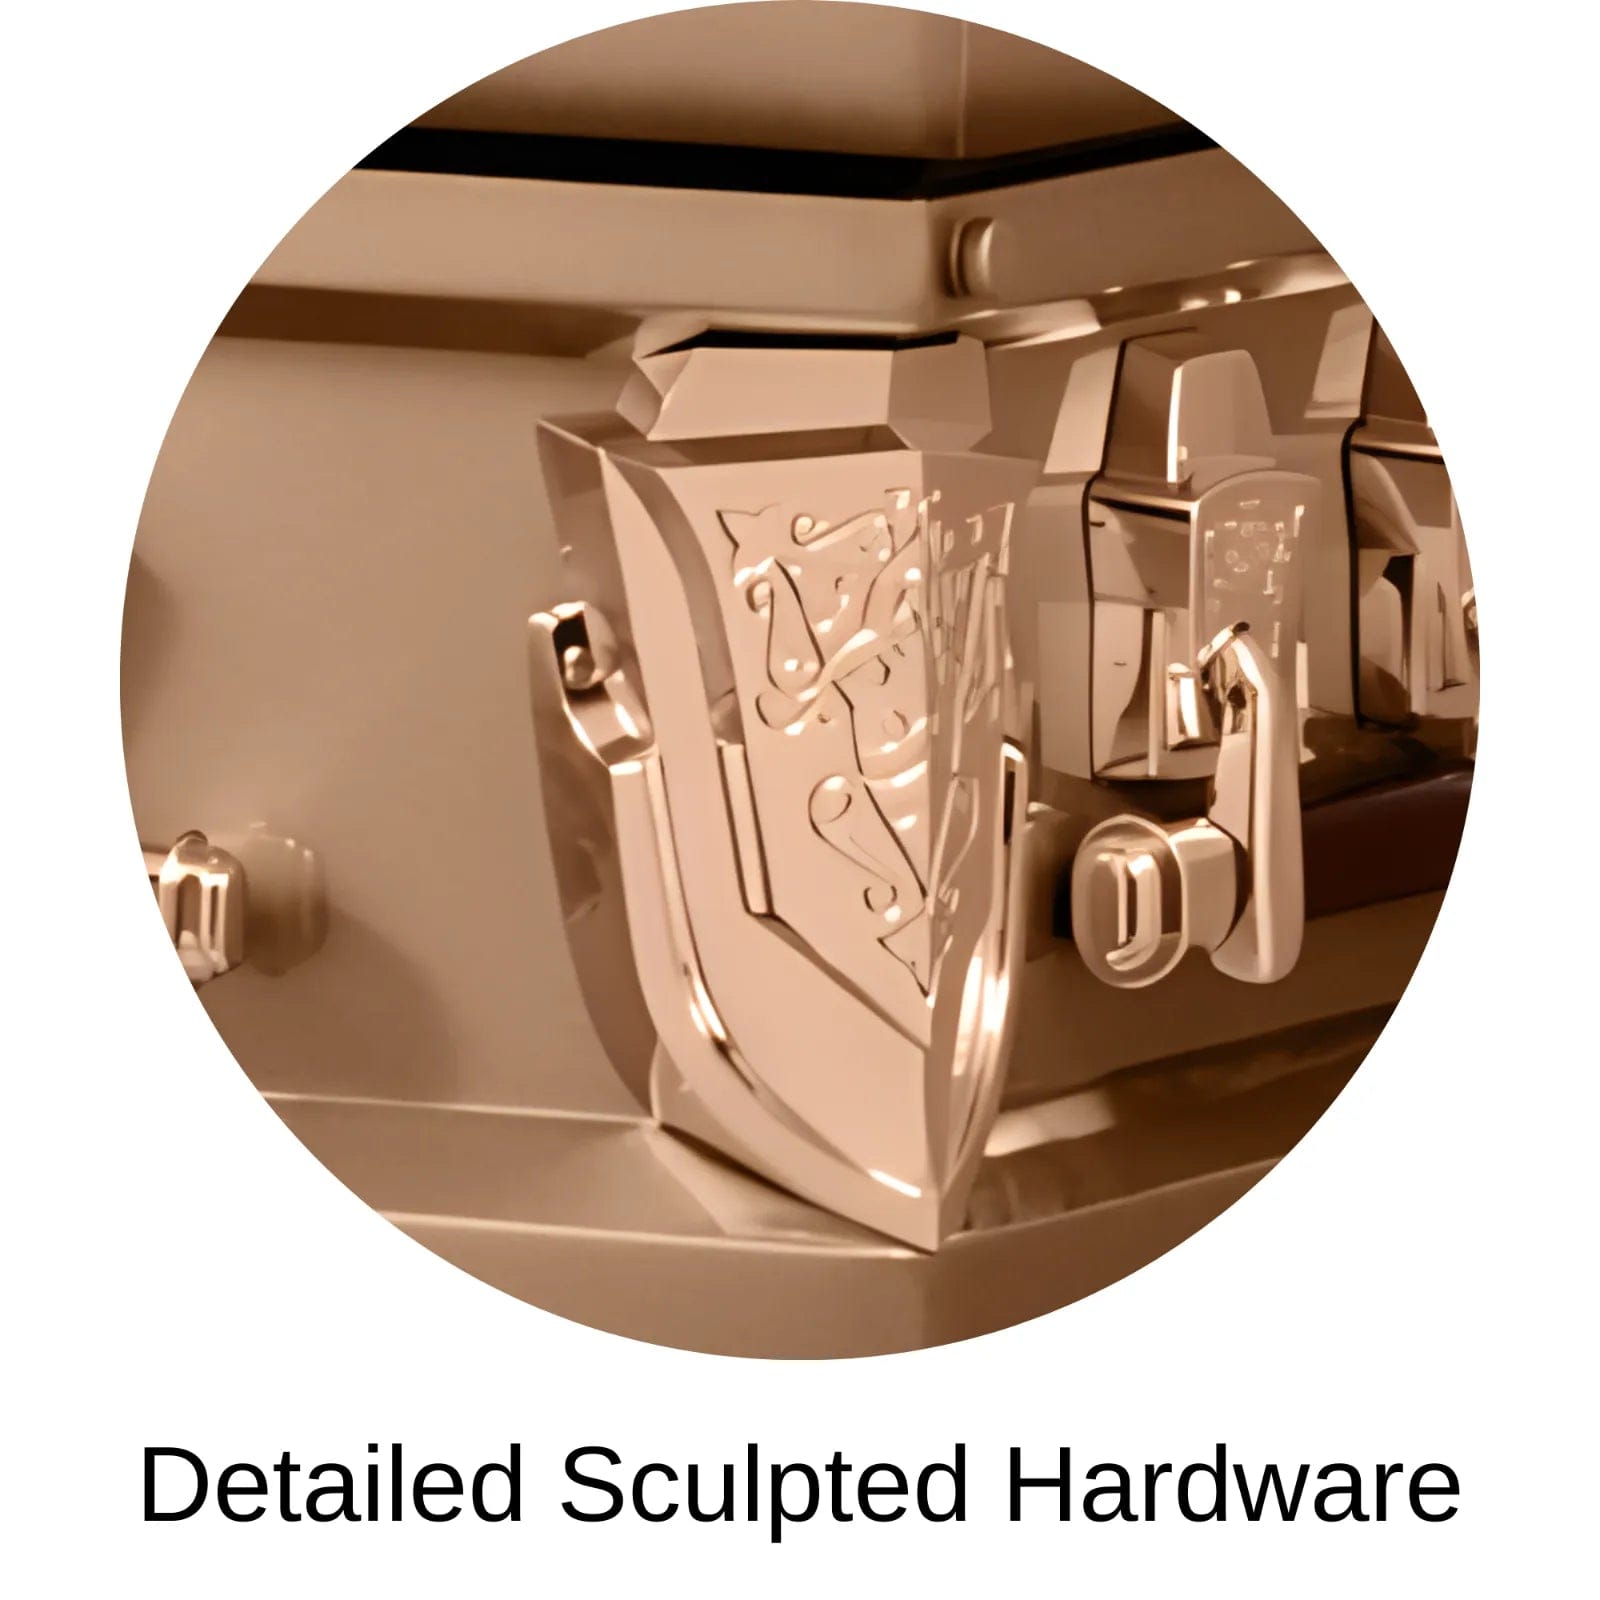 Detailed Sculpted Hardware Of Titan Cambridge Series Casket 